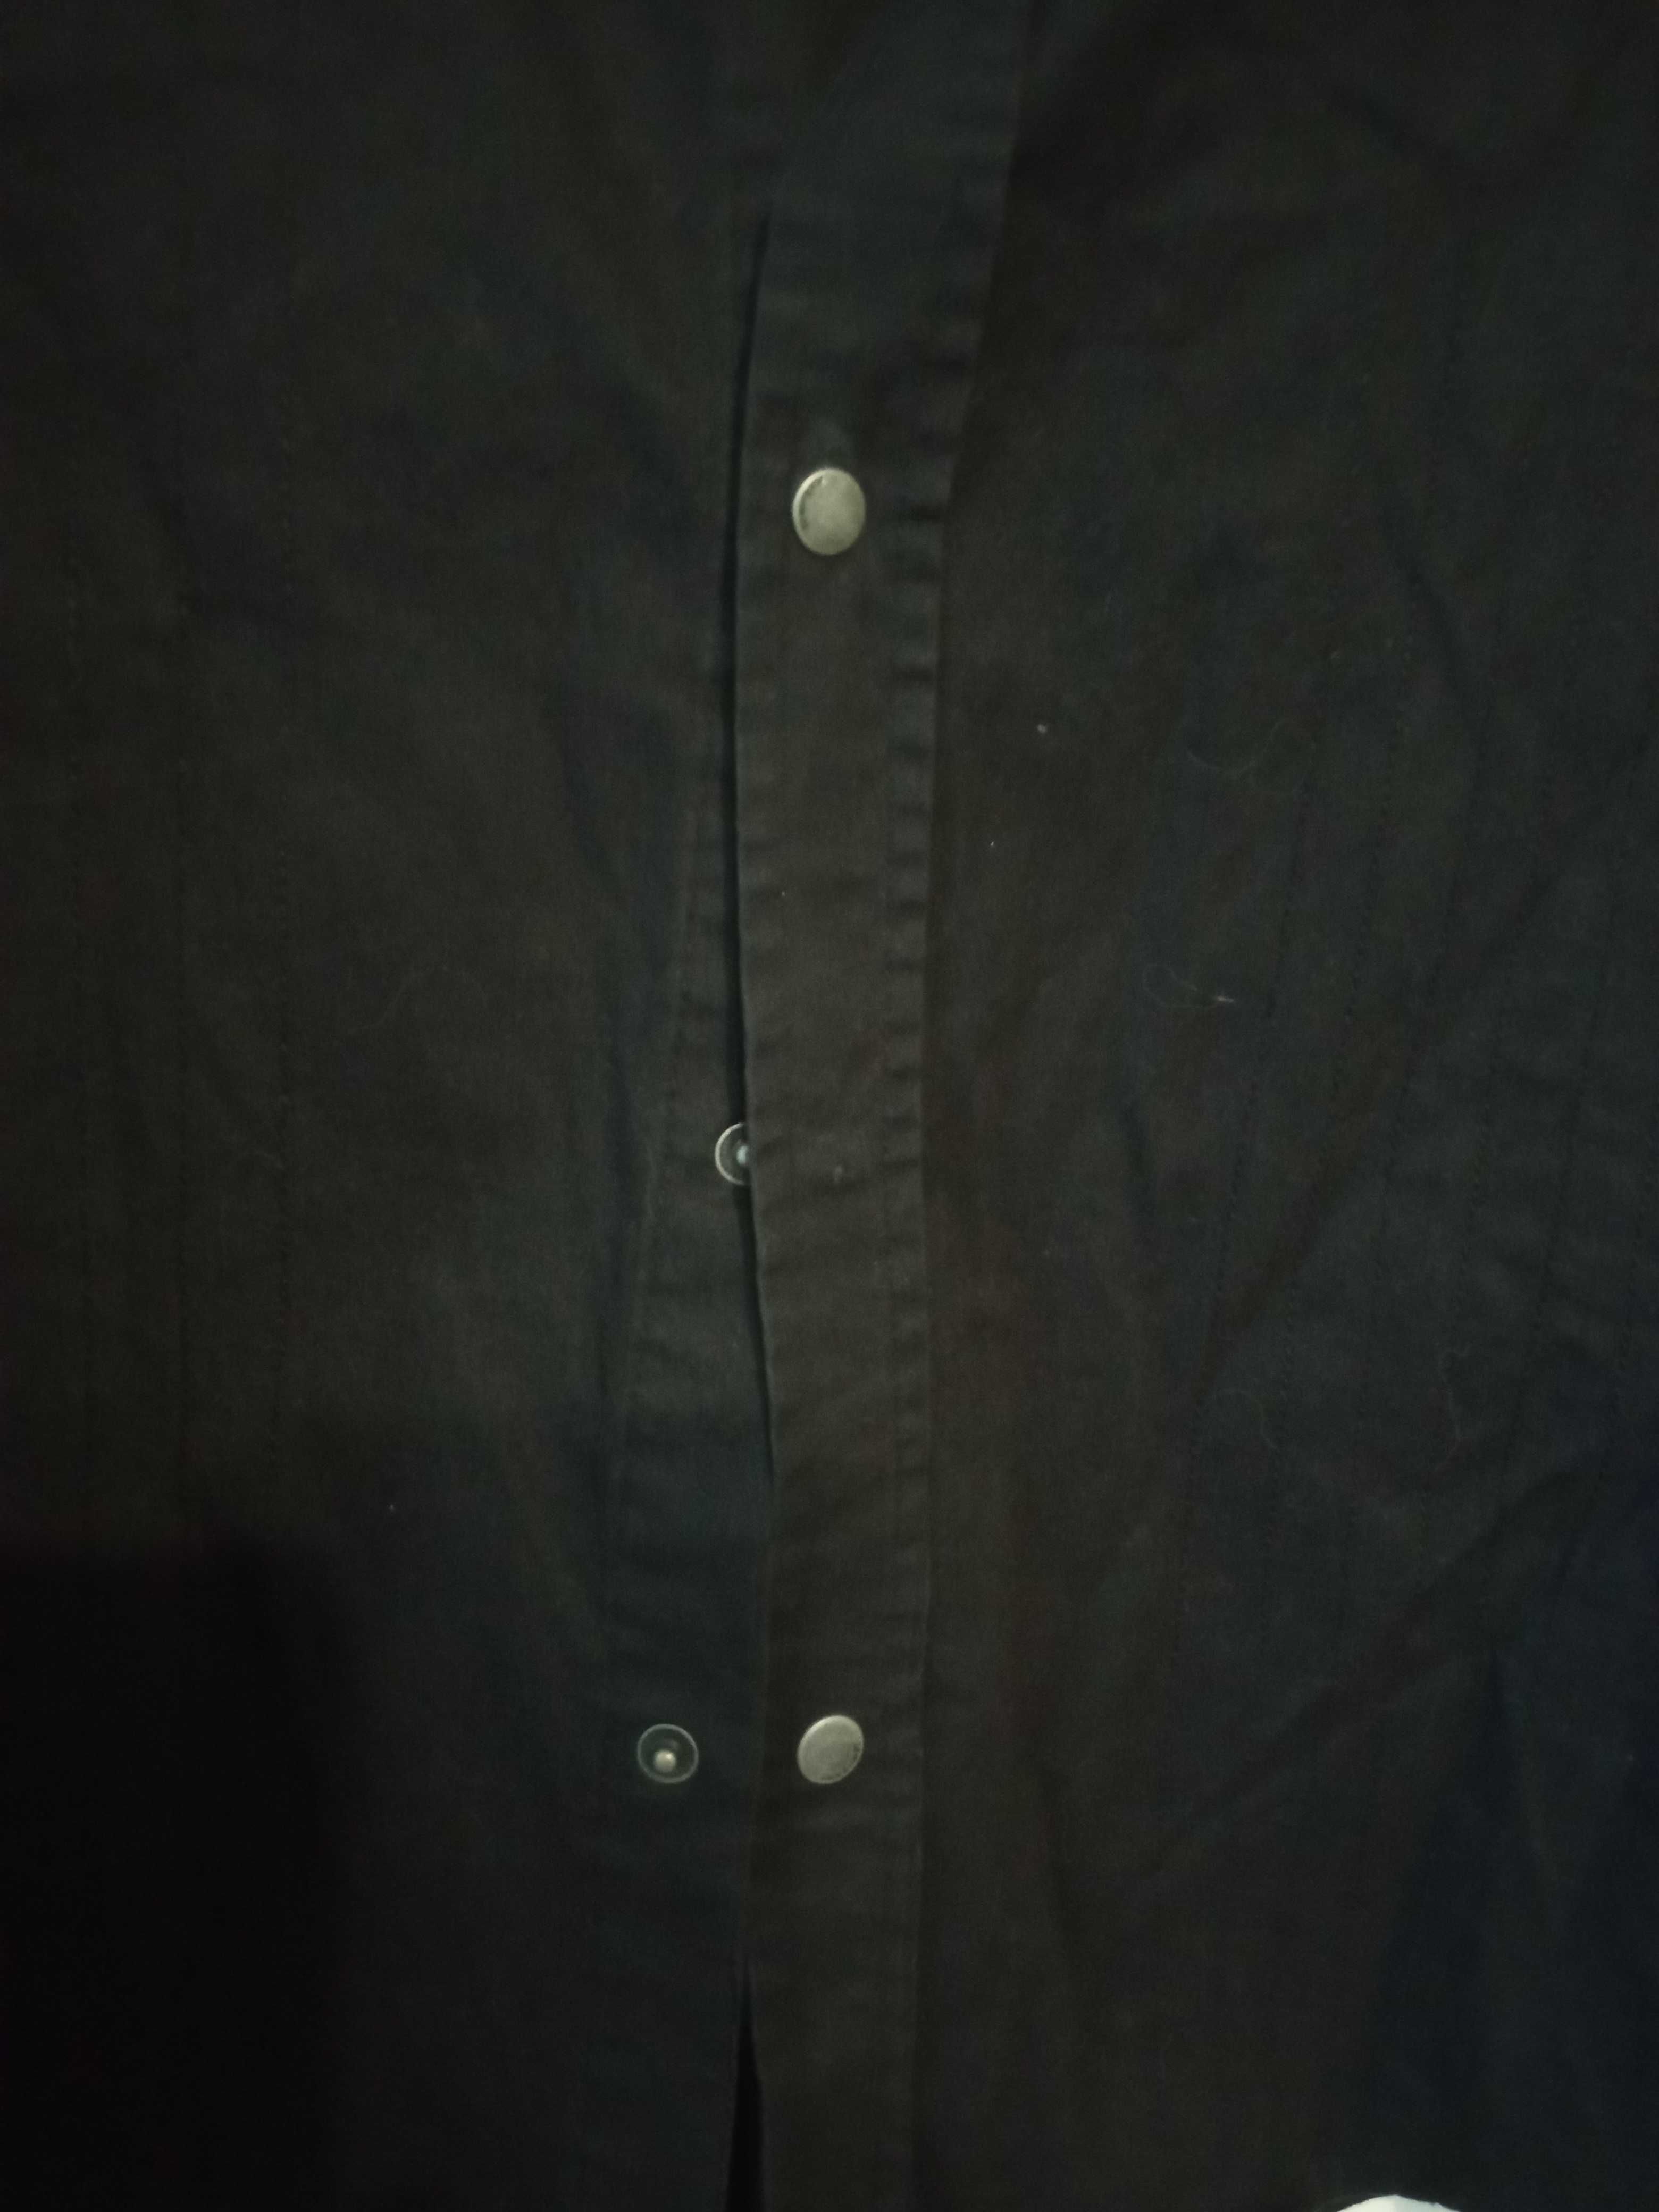 Рубашка мужская "JACK&JONES"(коттон)